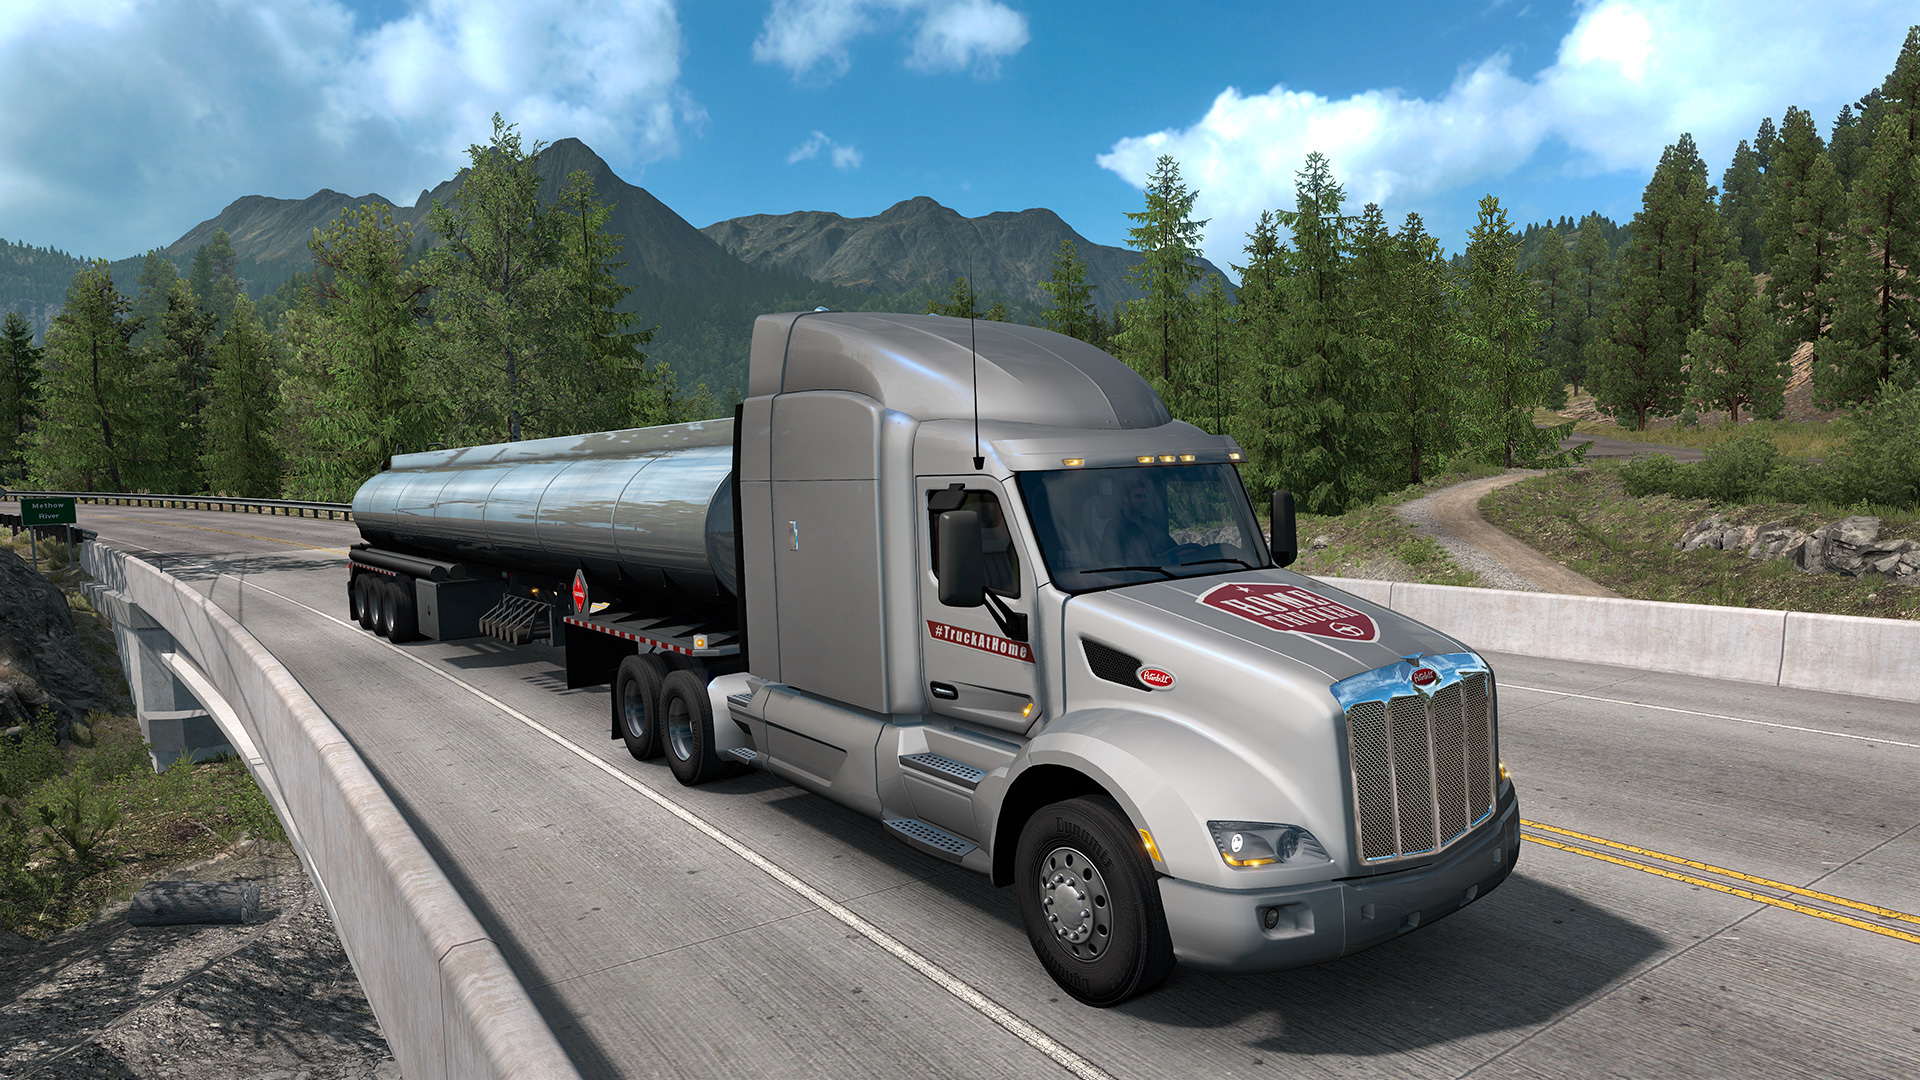 Етс атс. Американ Truck Simulator. Американ трак симулятор 2. ATS 1.41. Американские Грузовики для ETS 2.